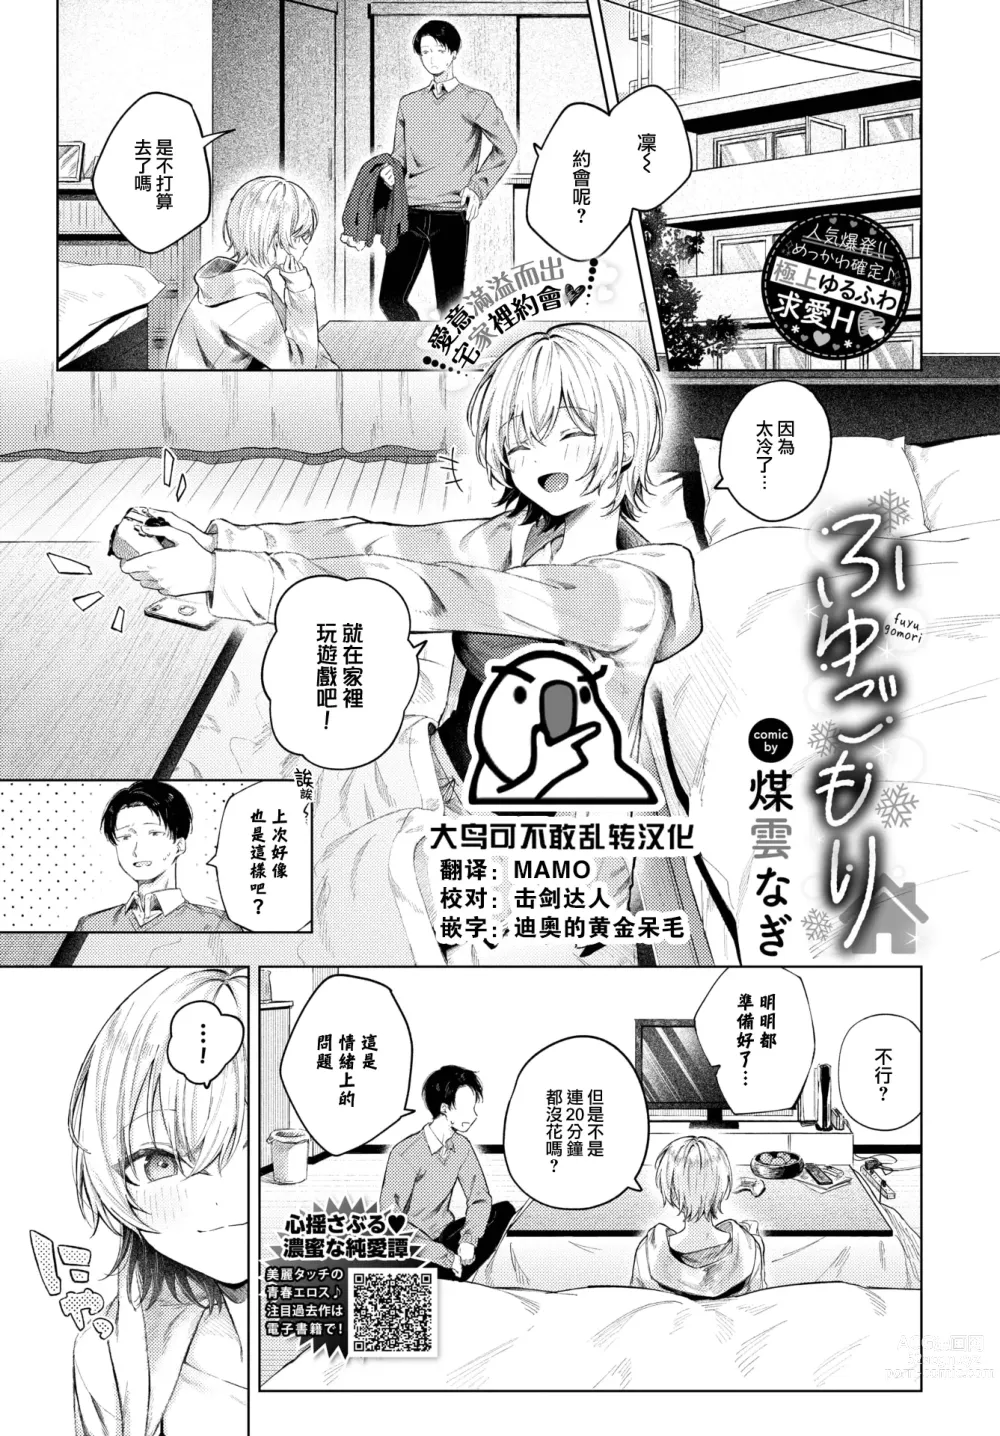 Page 1 of manga Fuyugomori